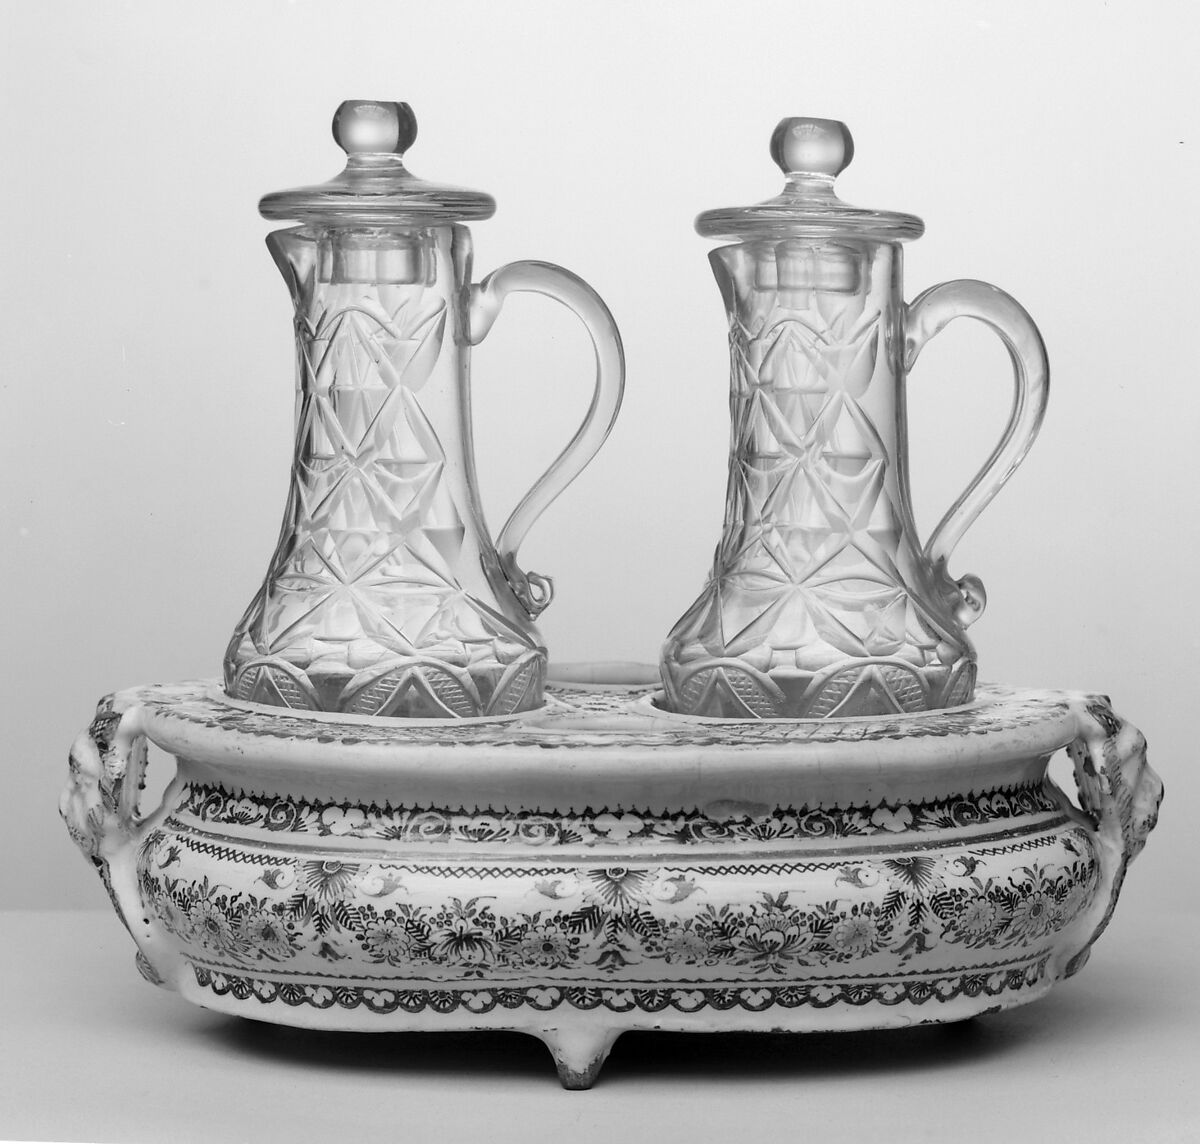 Cruet stand with cruets, Faience (tin-glazed earthenware); glass, French, Rouen 